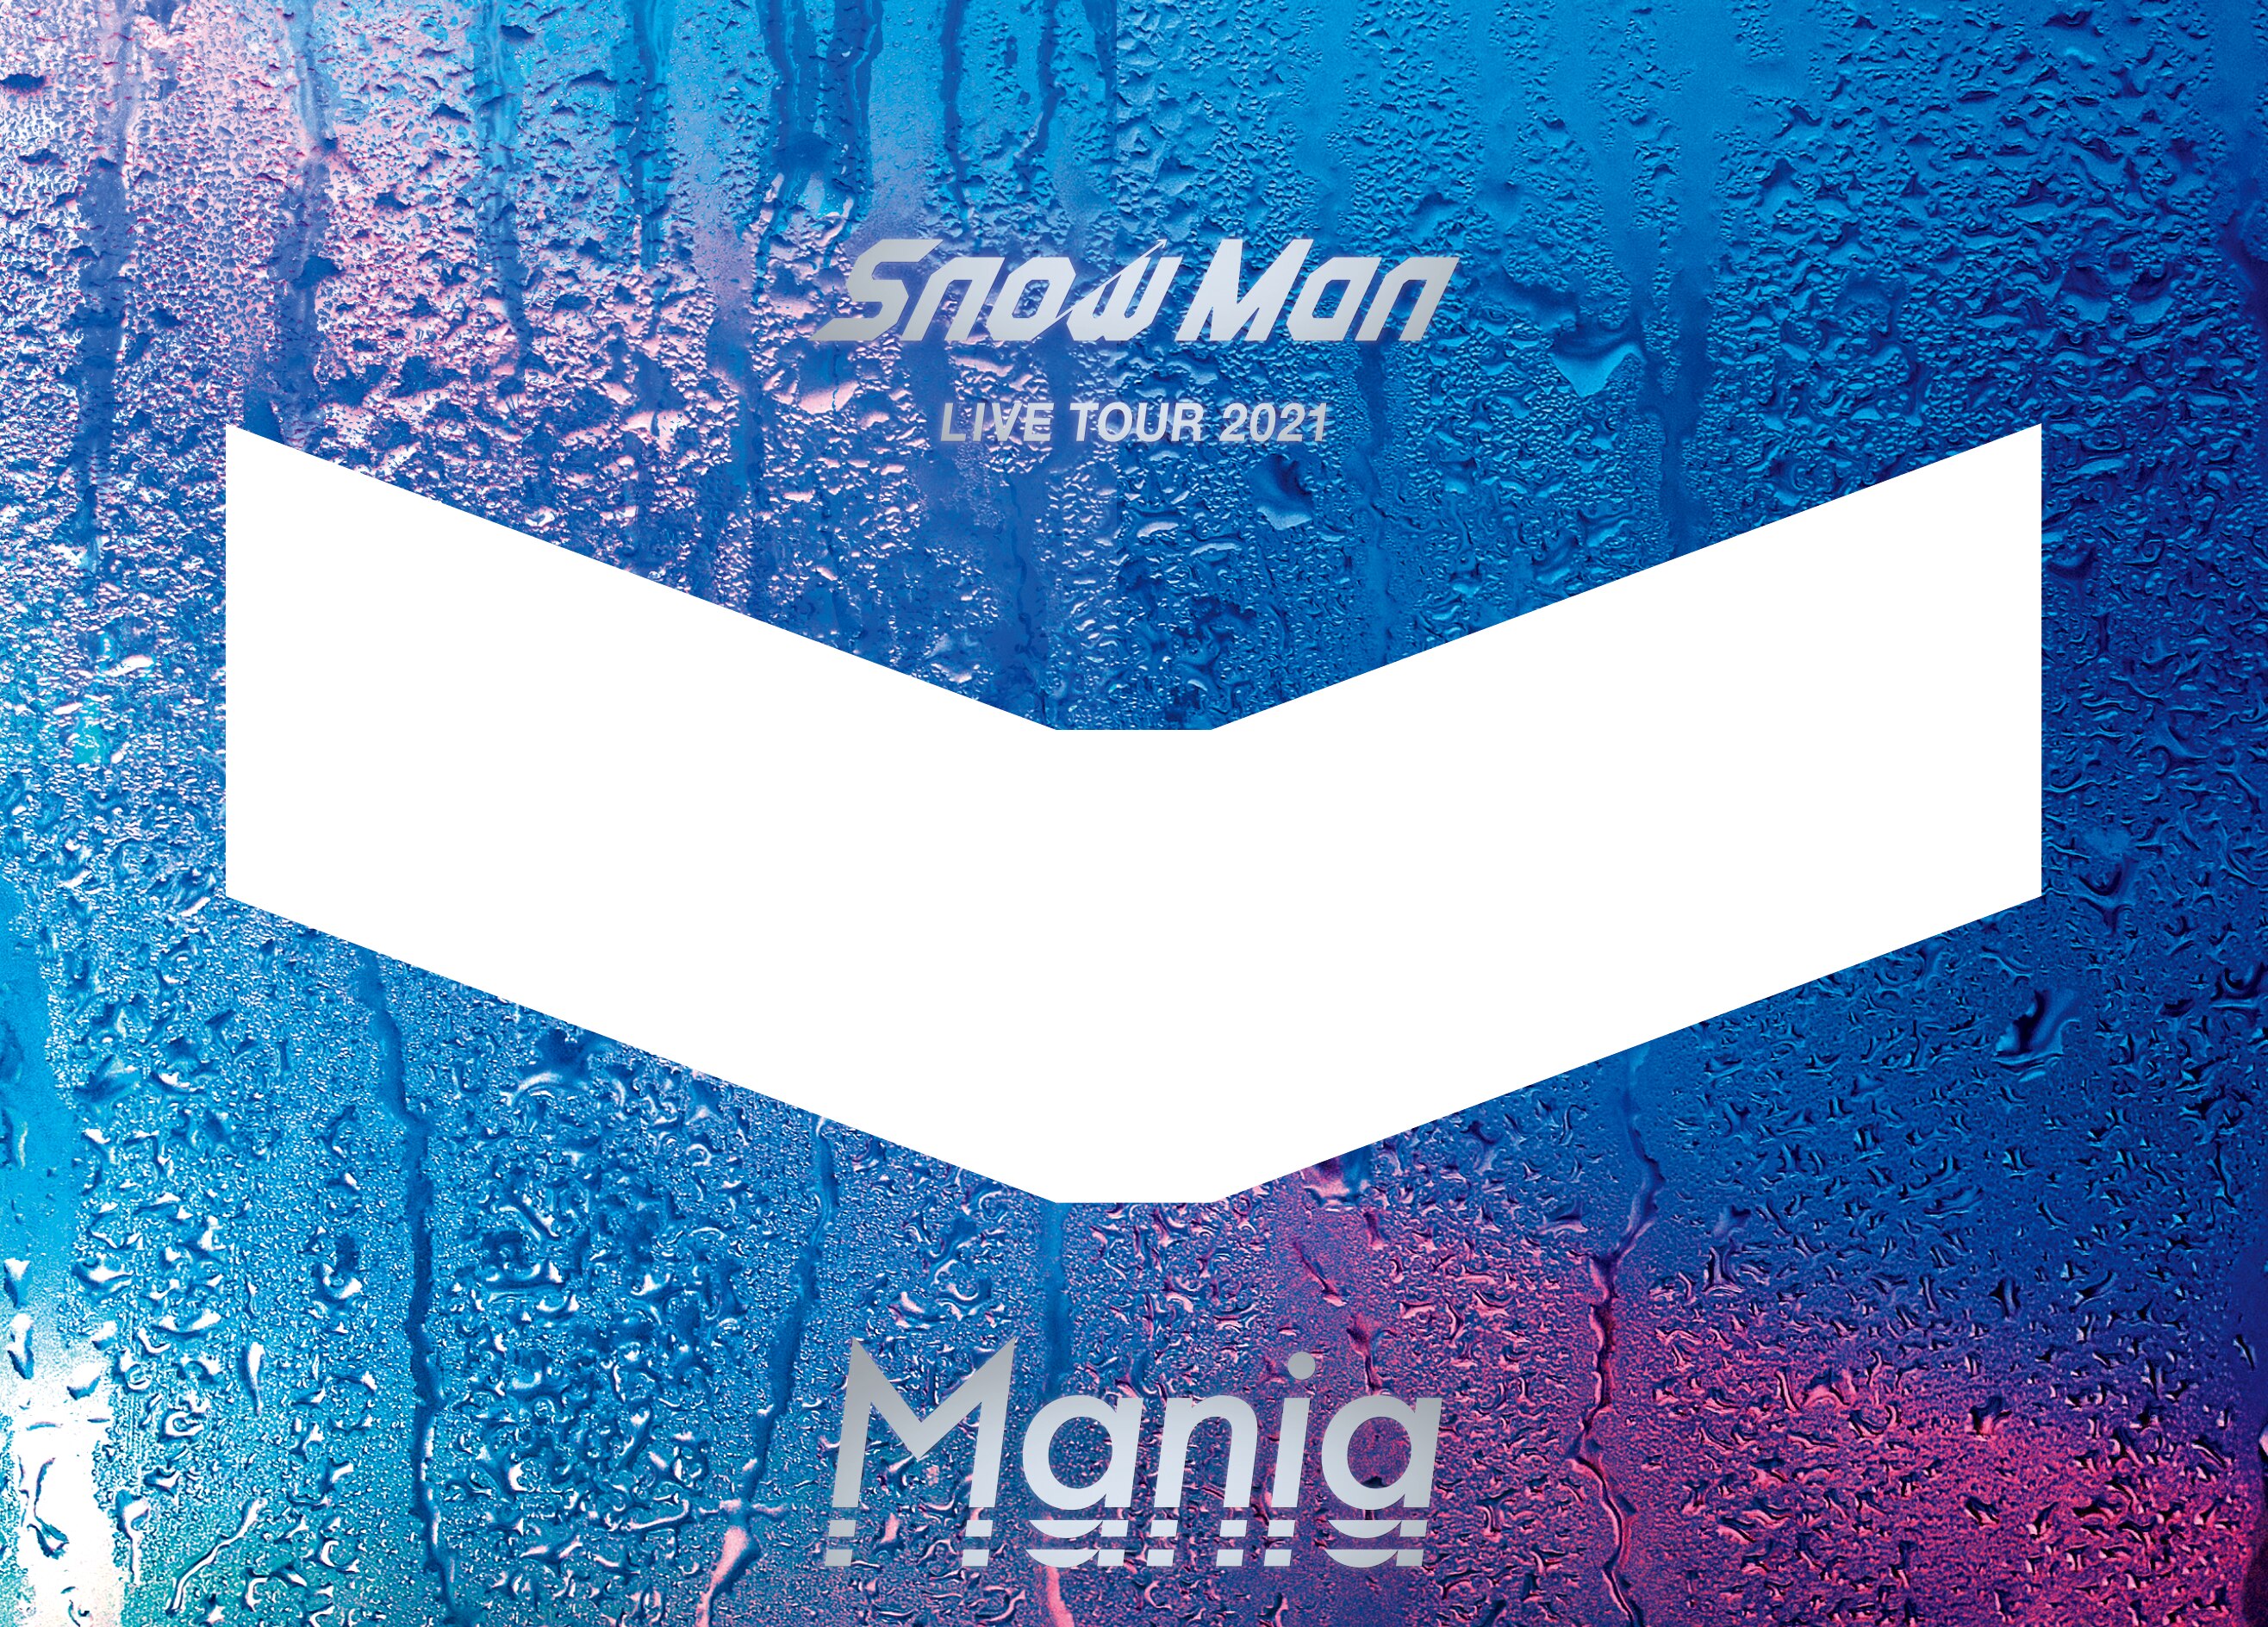 DVD/初回盤】Snow Man LIVE TOUR 2021 Mania ミュージック DVD ...